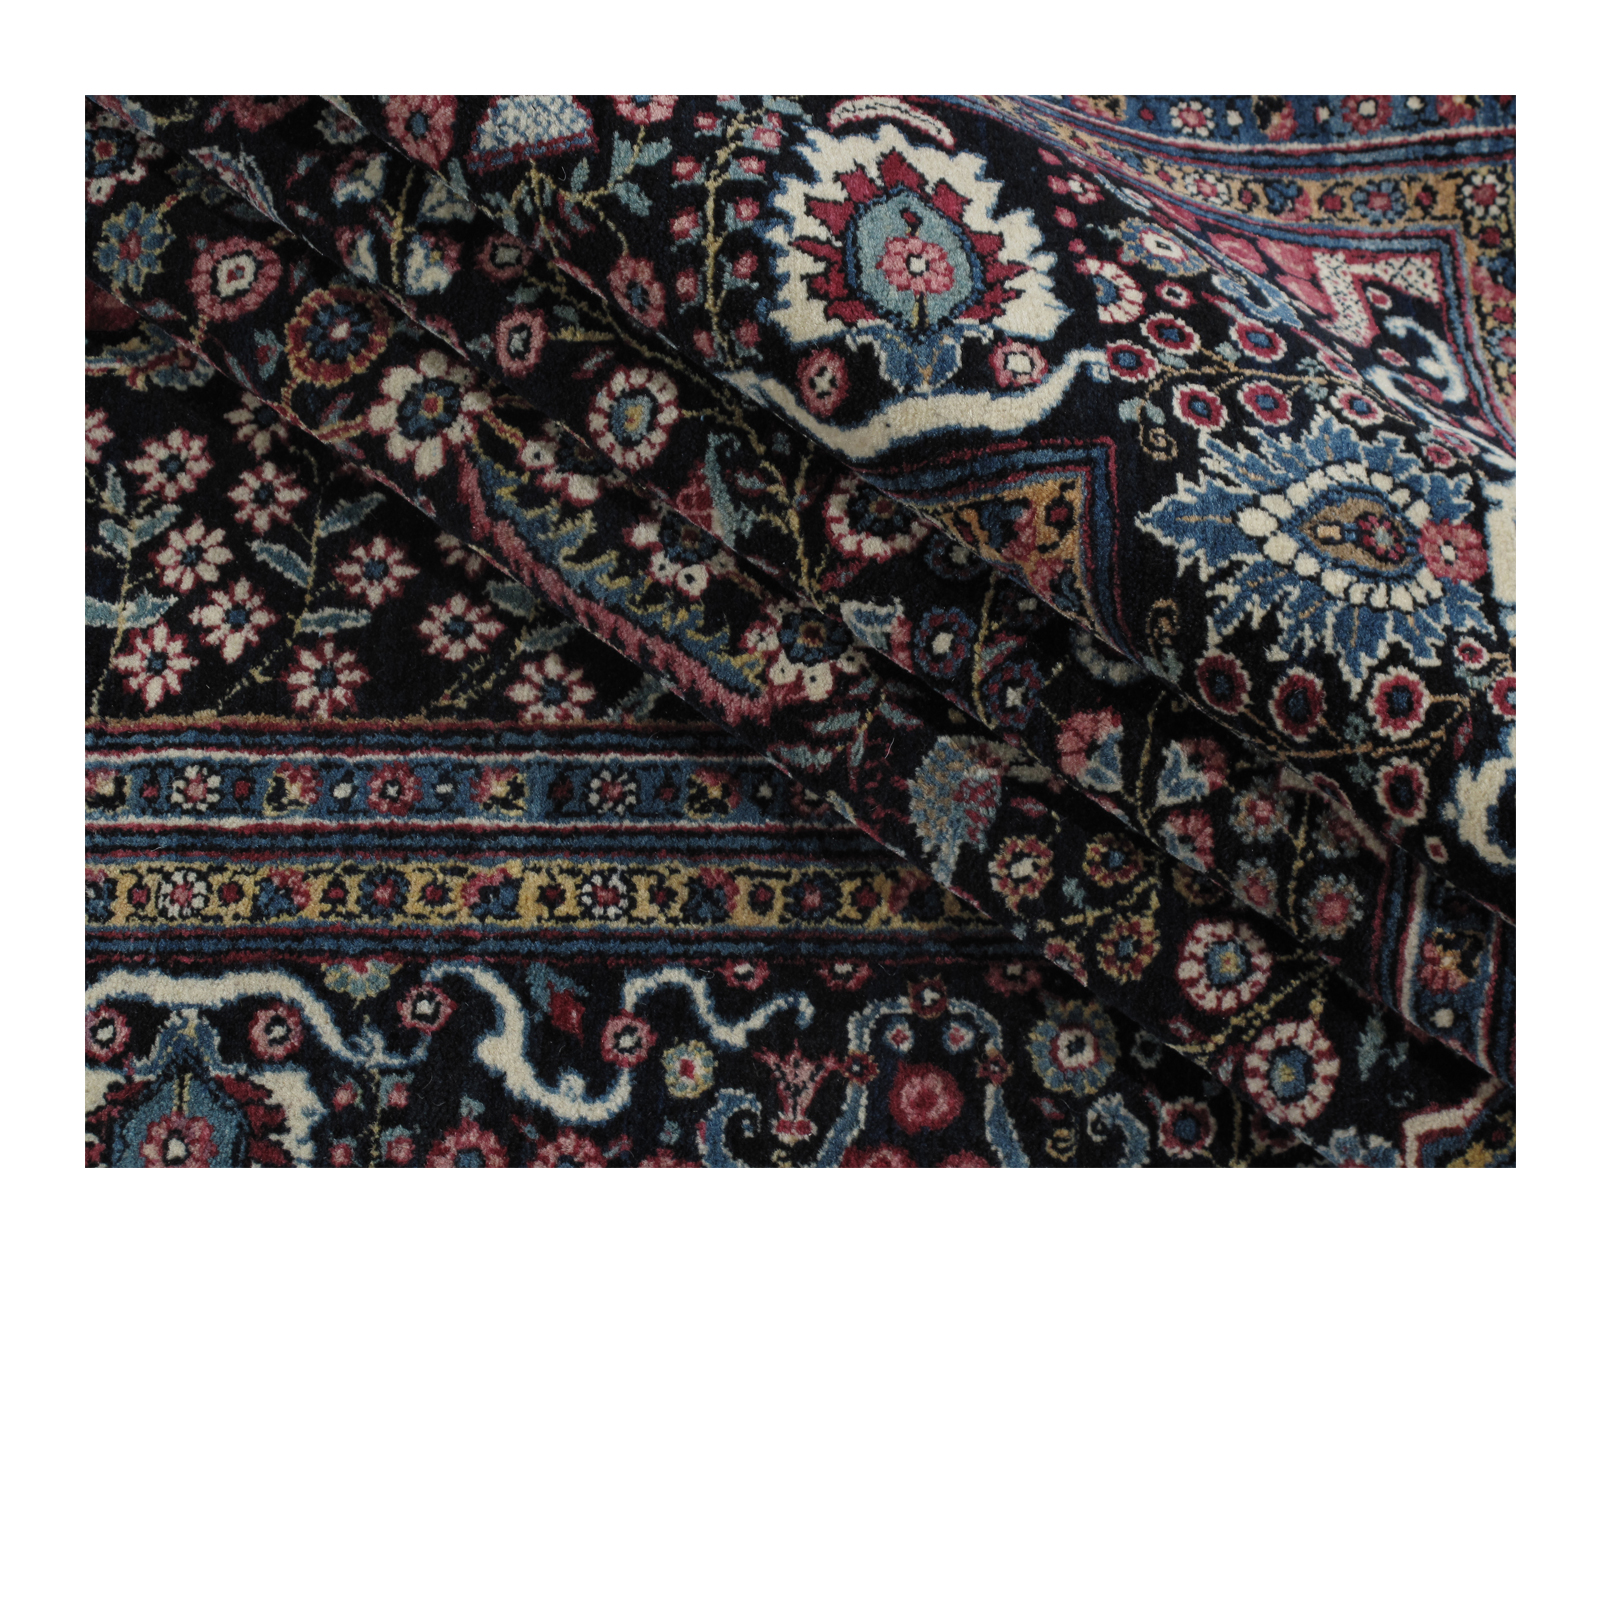 Antique Persian Tehran rug is made of 100% wool.